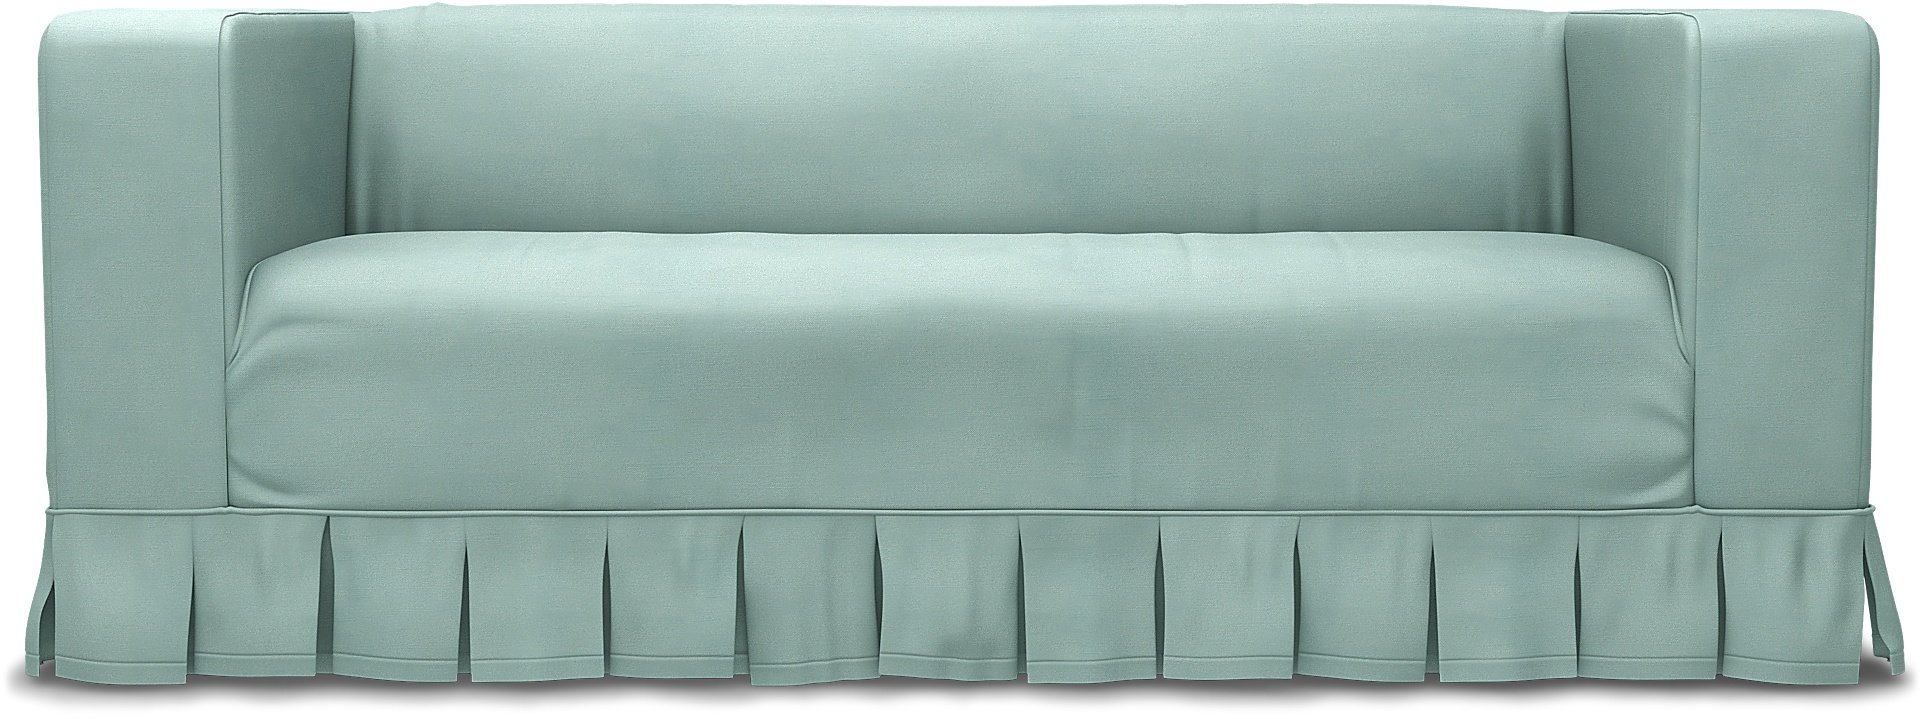 IKEA - Klippan 2 Seater Sofa Cover, Mineral Blue, Linen - Bemz